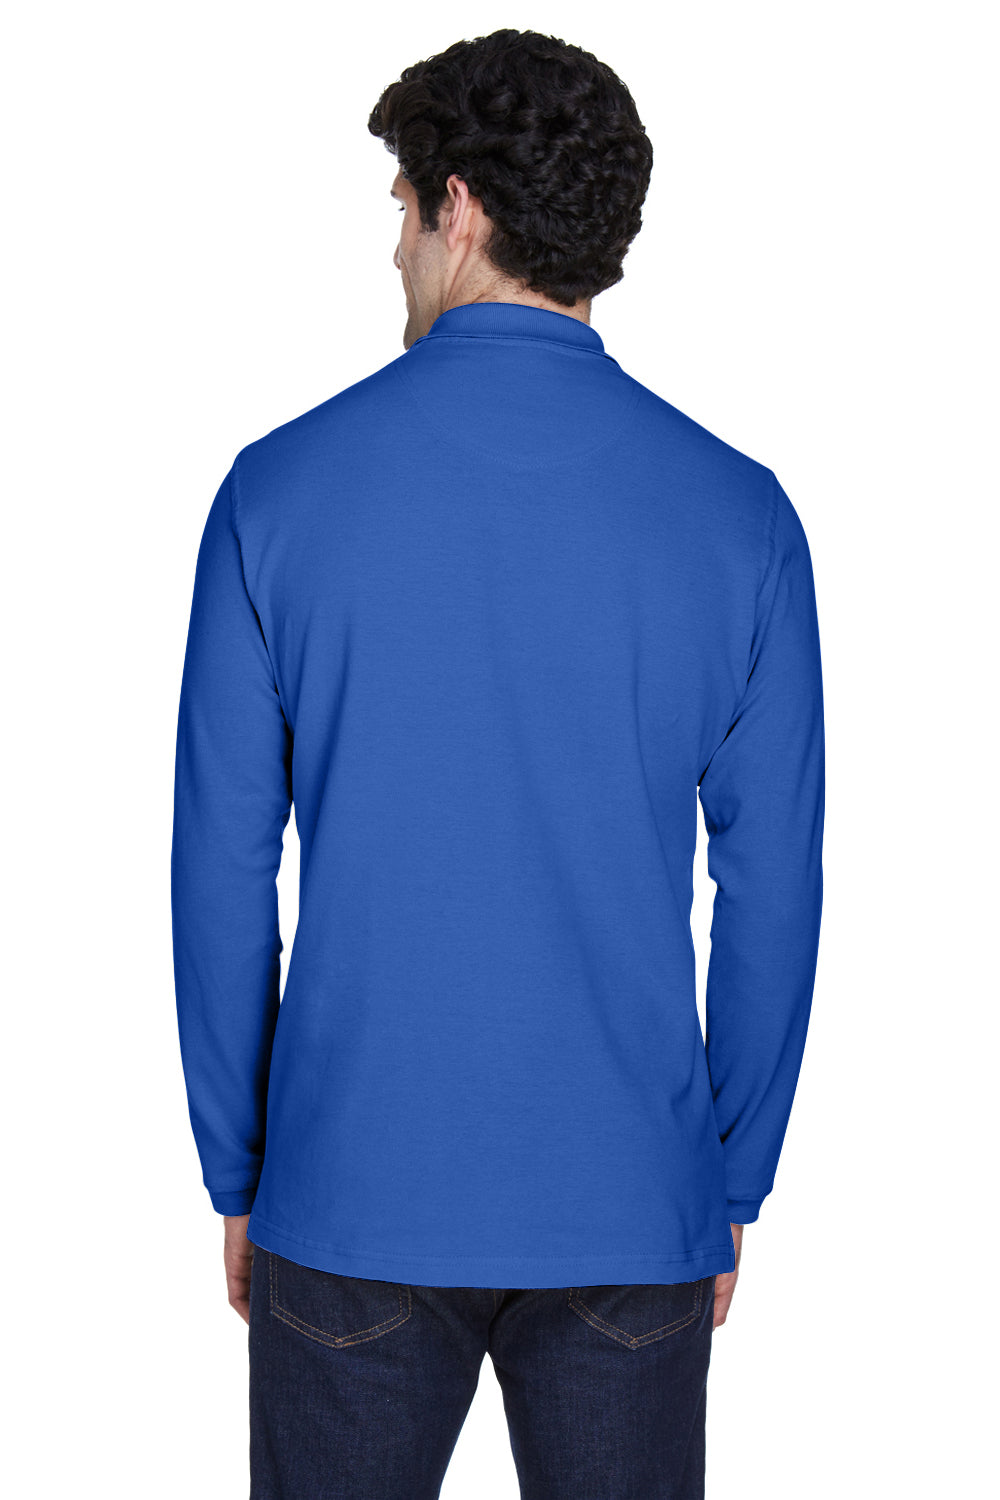 UltraClub 8532 Mens Classic Long Sleeve Polo Shirt Royal Blue Back